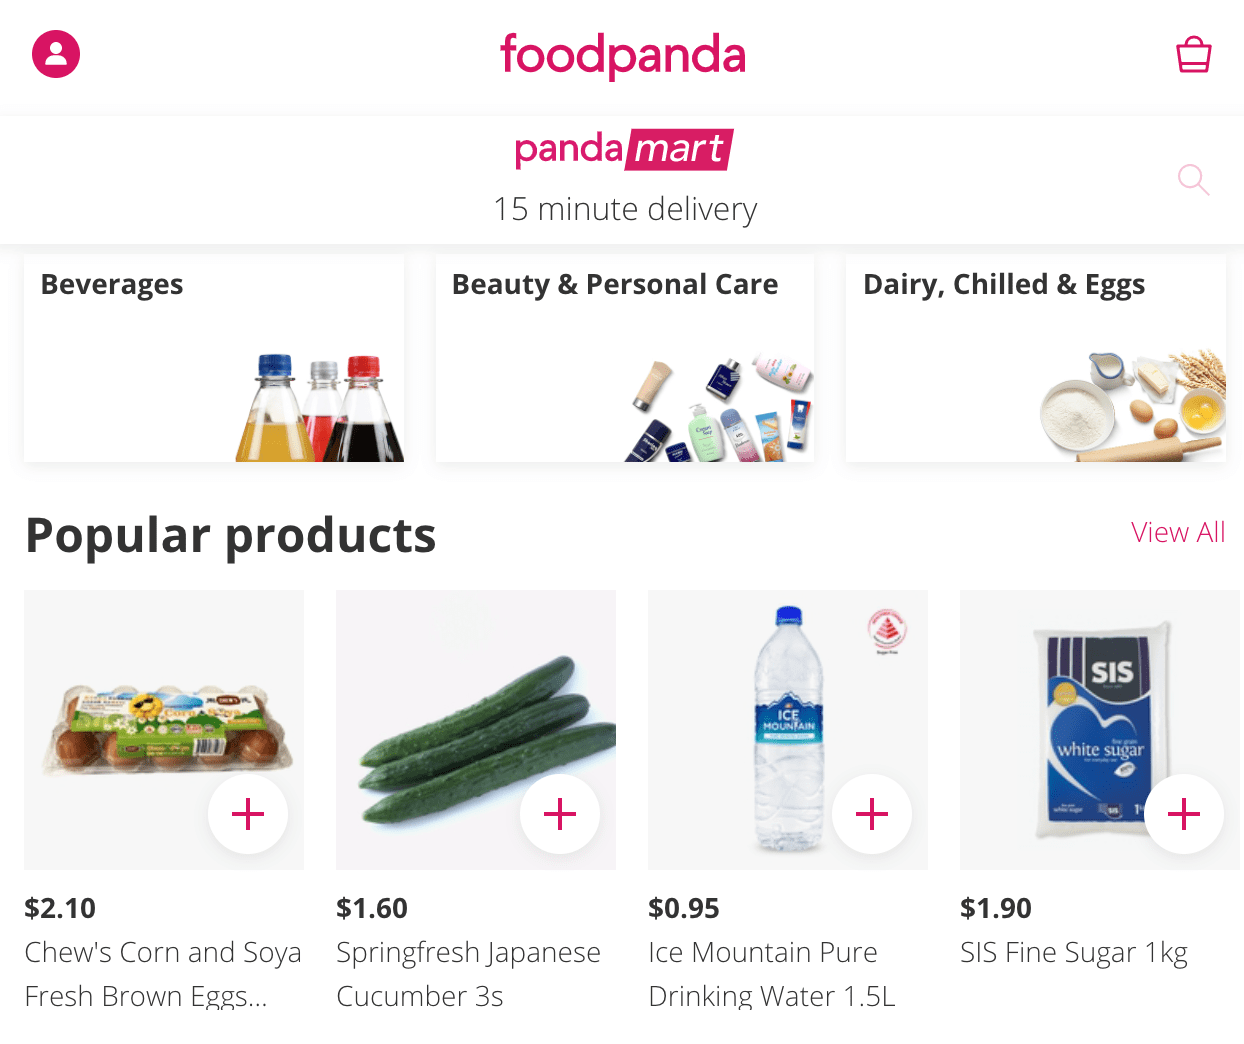 pandamart online groceries - foodpanda 11.11 sale